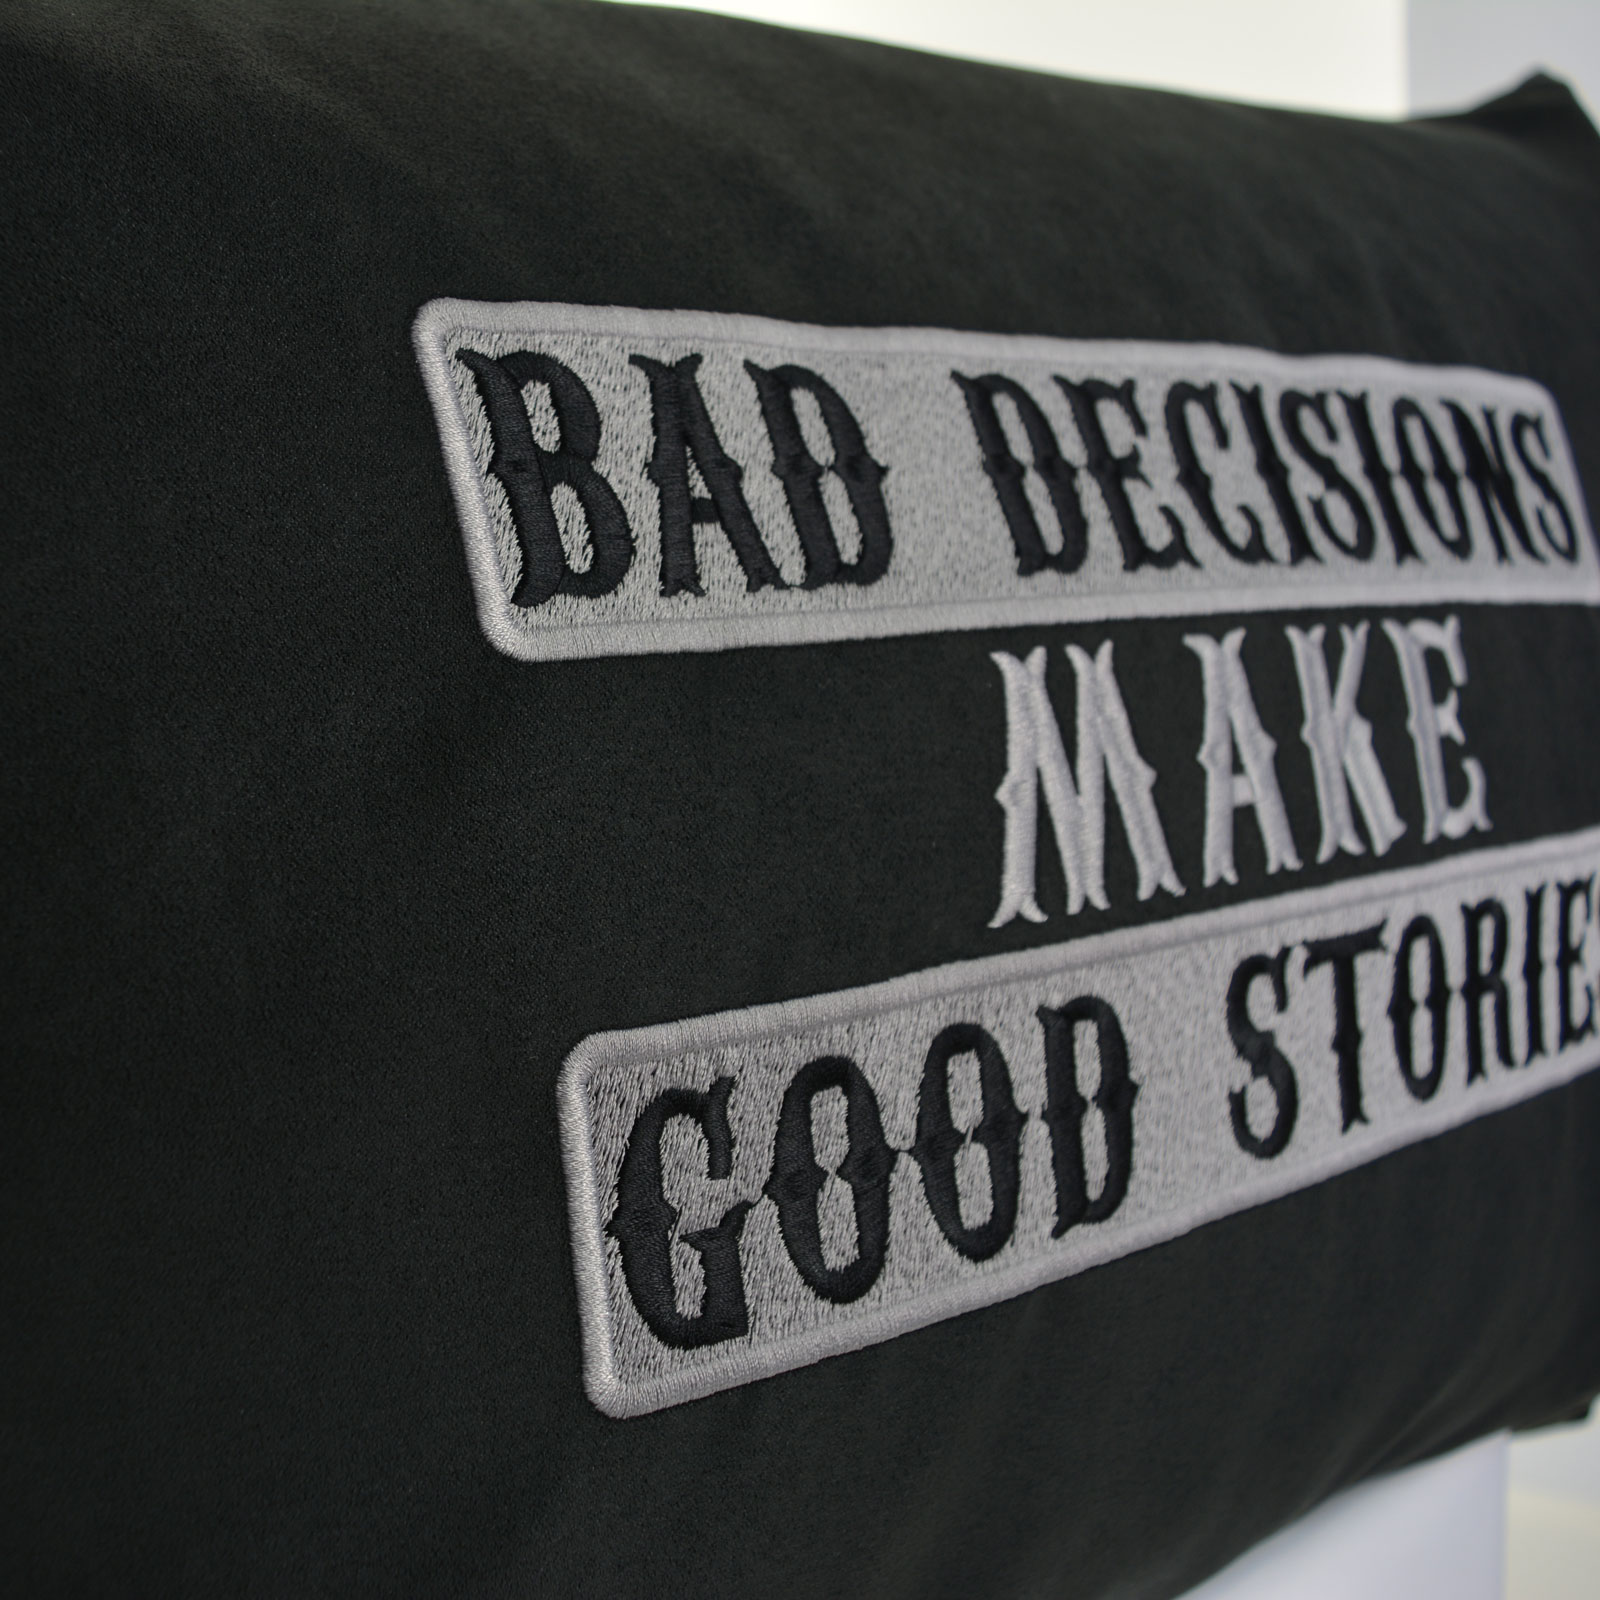 Bad decisions make good stories - Kissen